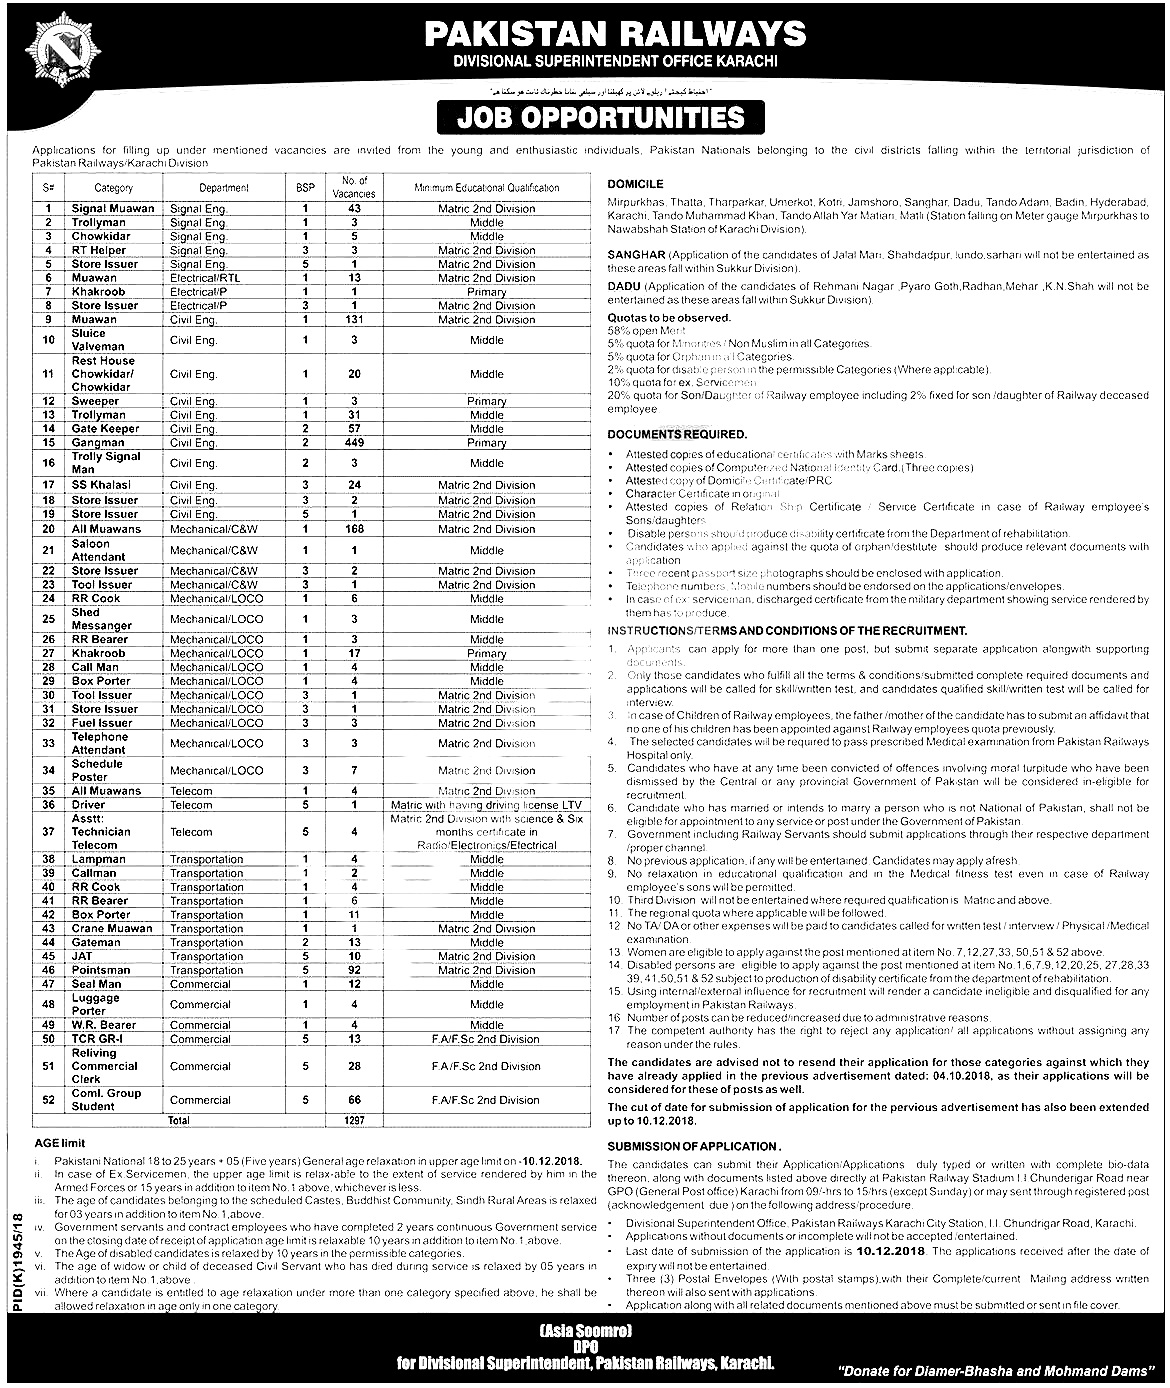 Pakistan Railway Karachi Jobs 2018 Apply Online